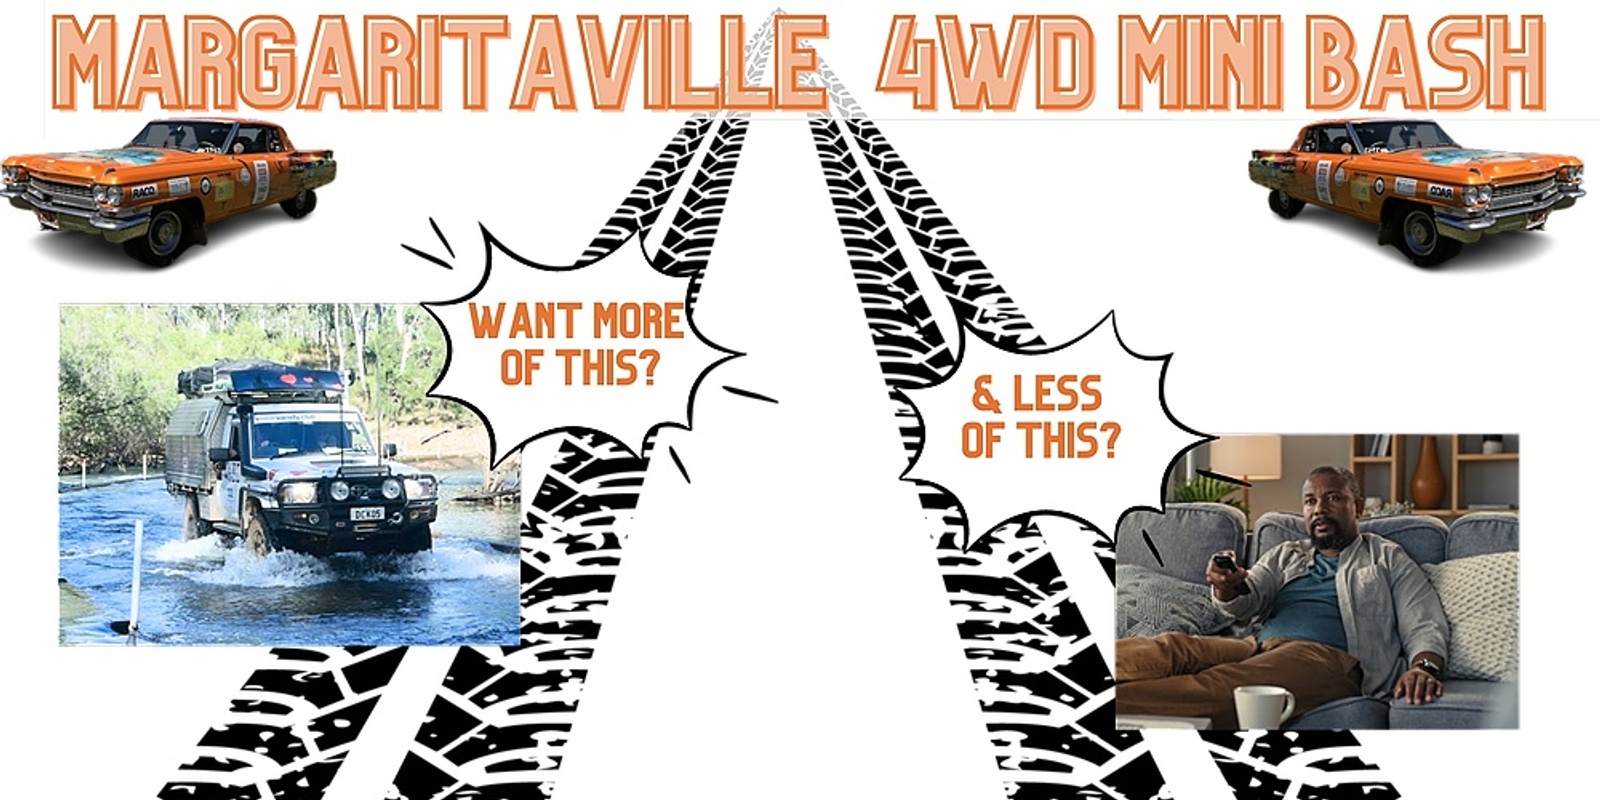 Banner image for Margaritaville 4WD Mini Bash 